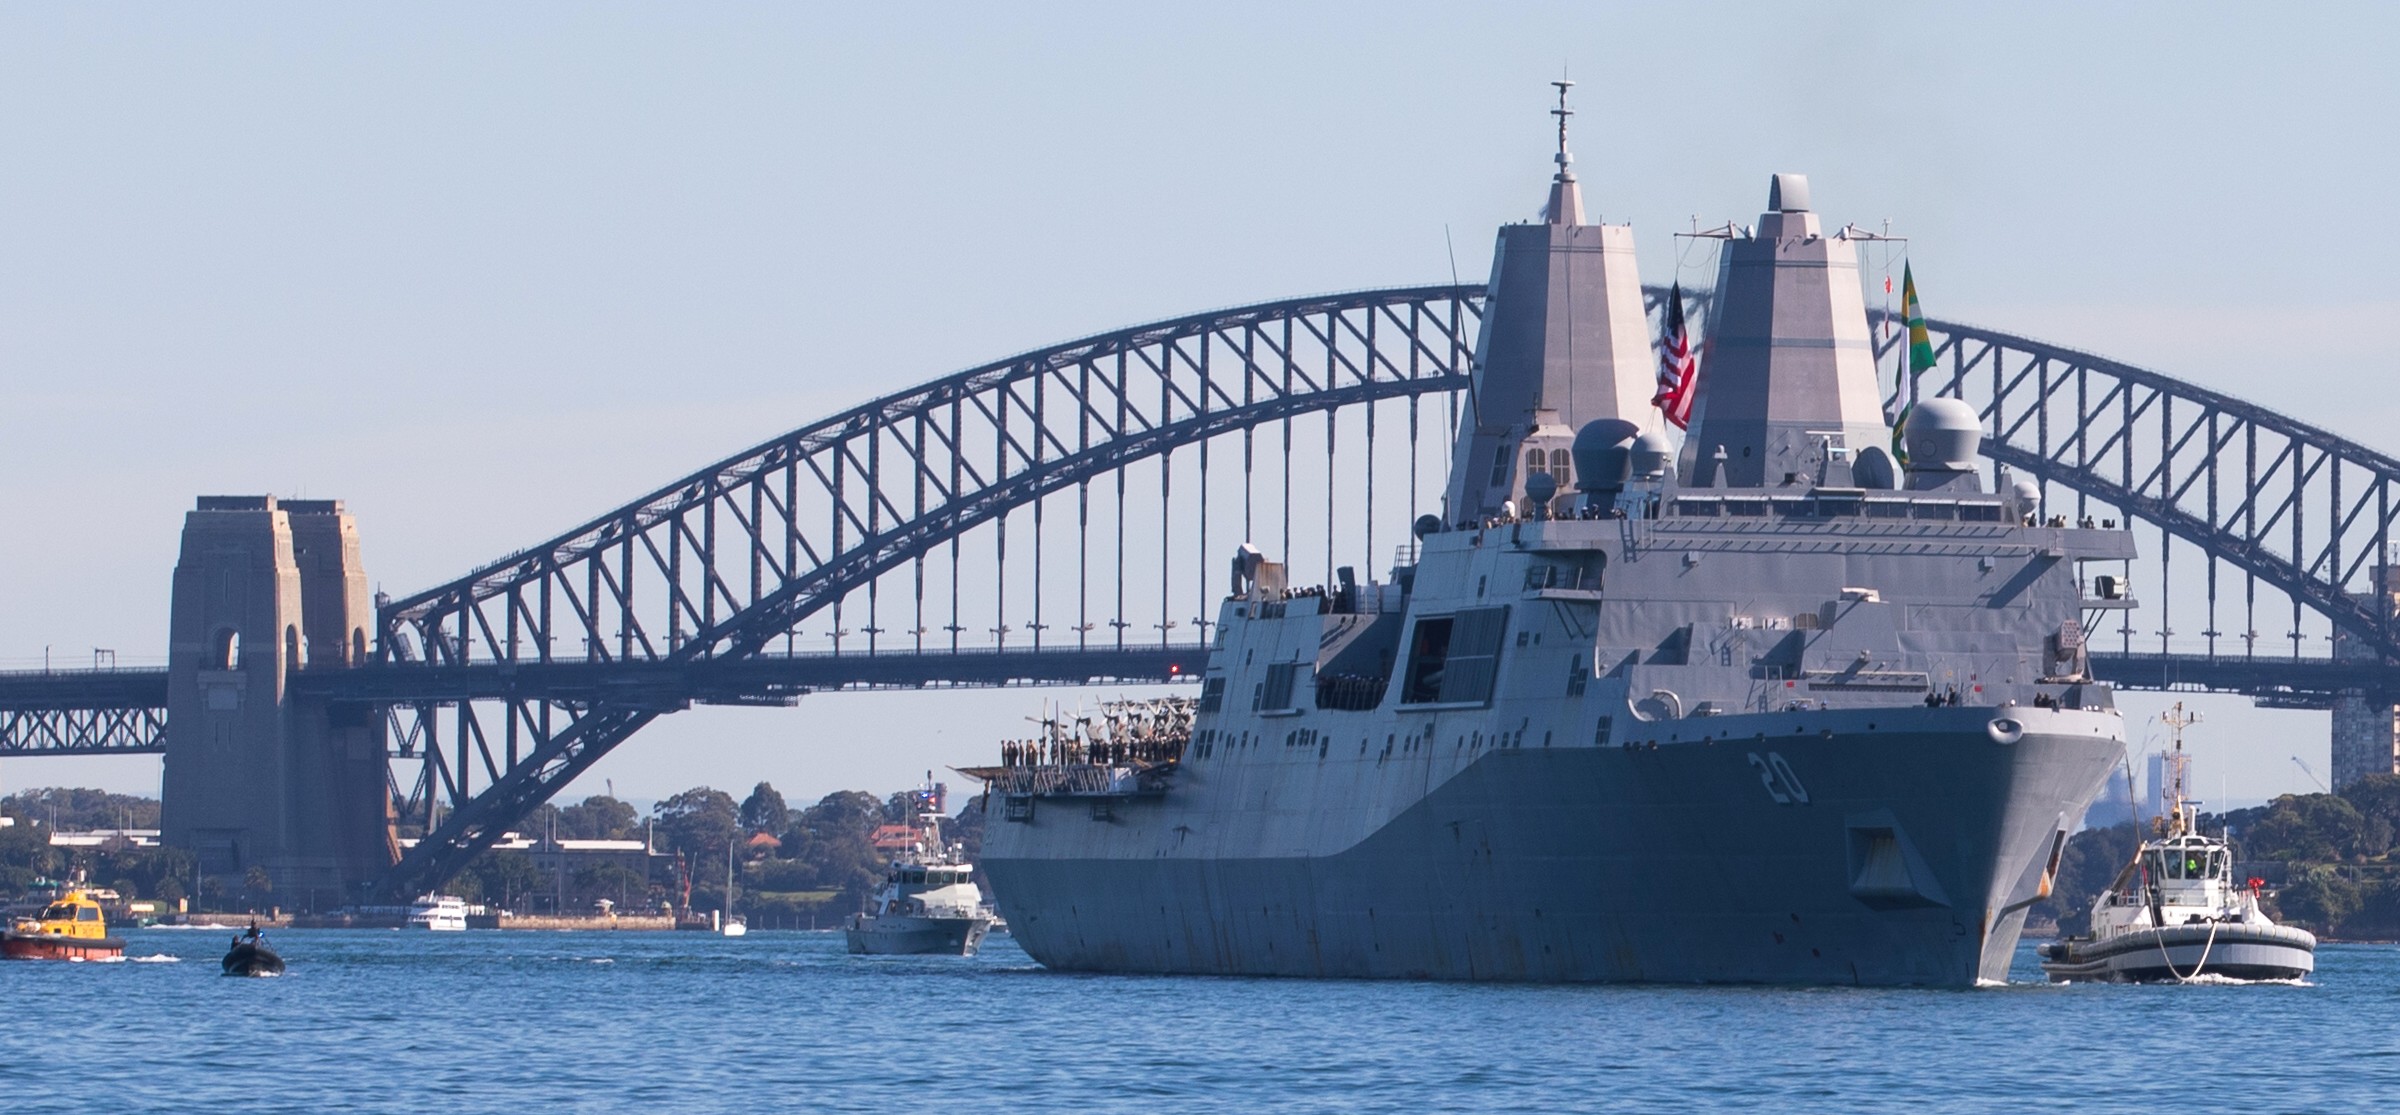 lpd-20 uss green bay san antonio class amphibious transport dock landing ship us navy sydney australia 143